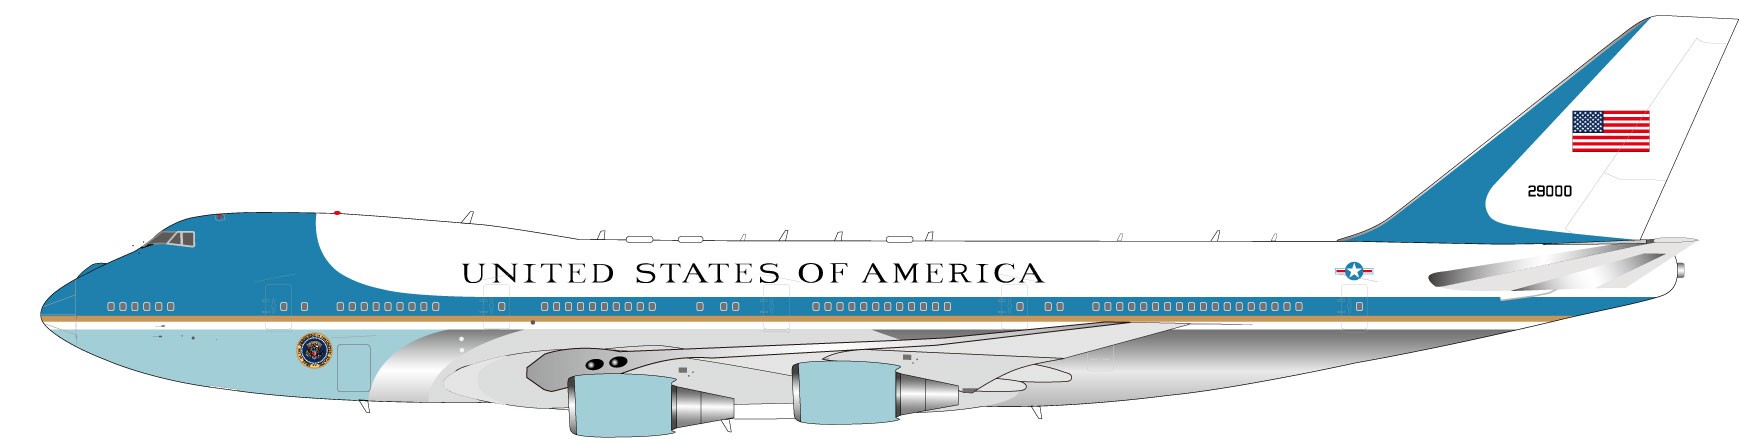 Inlfight Die-cast metal models. USAF Air Force One 747-200 VC-25A Reg ...